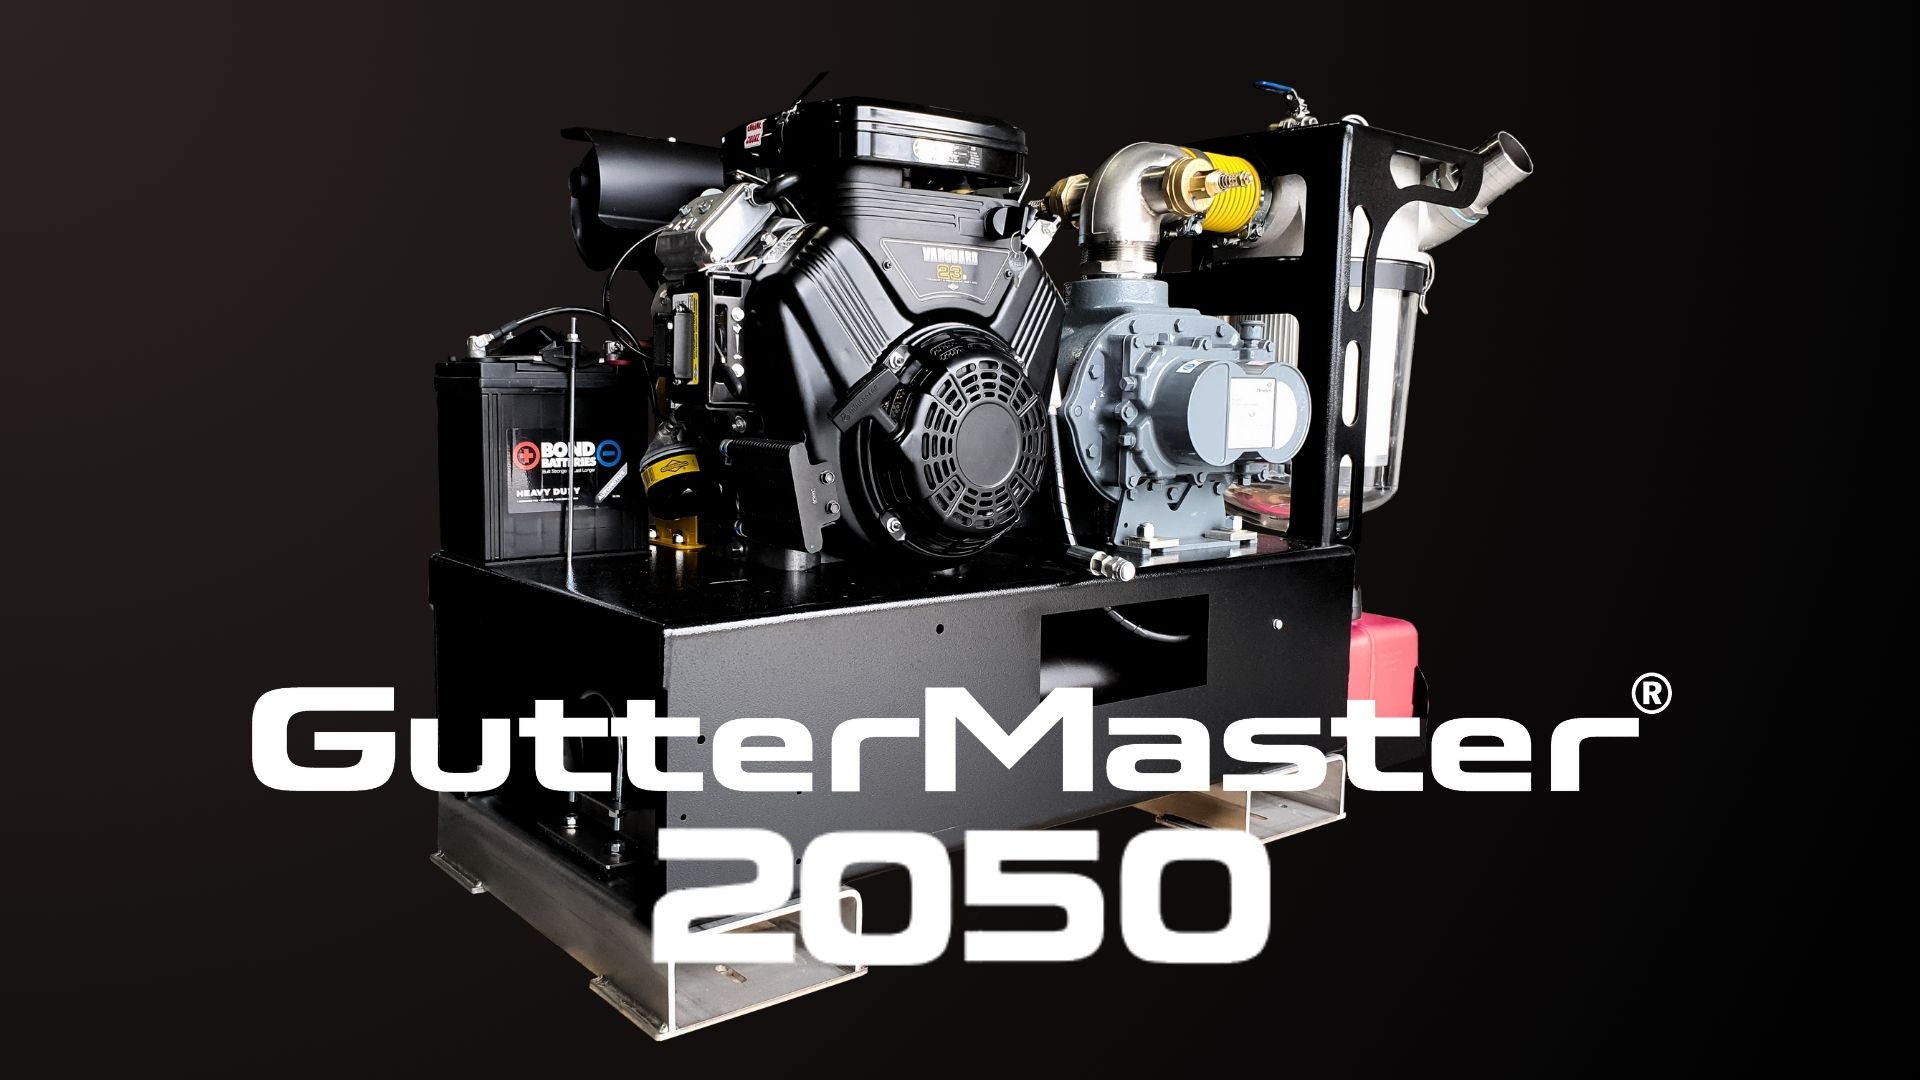 Gutter vacuum system gatter master 2050 proudly australian made